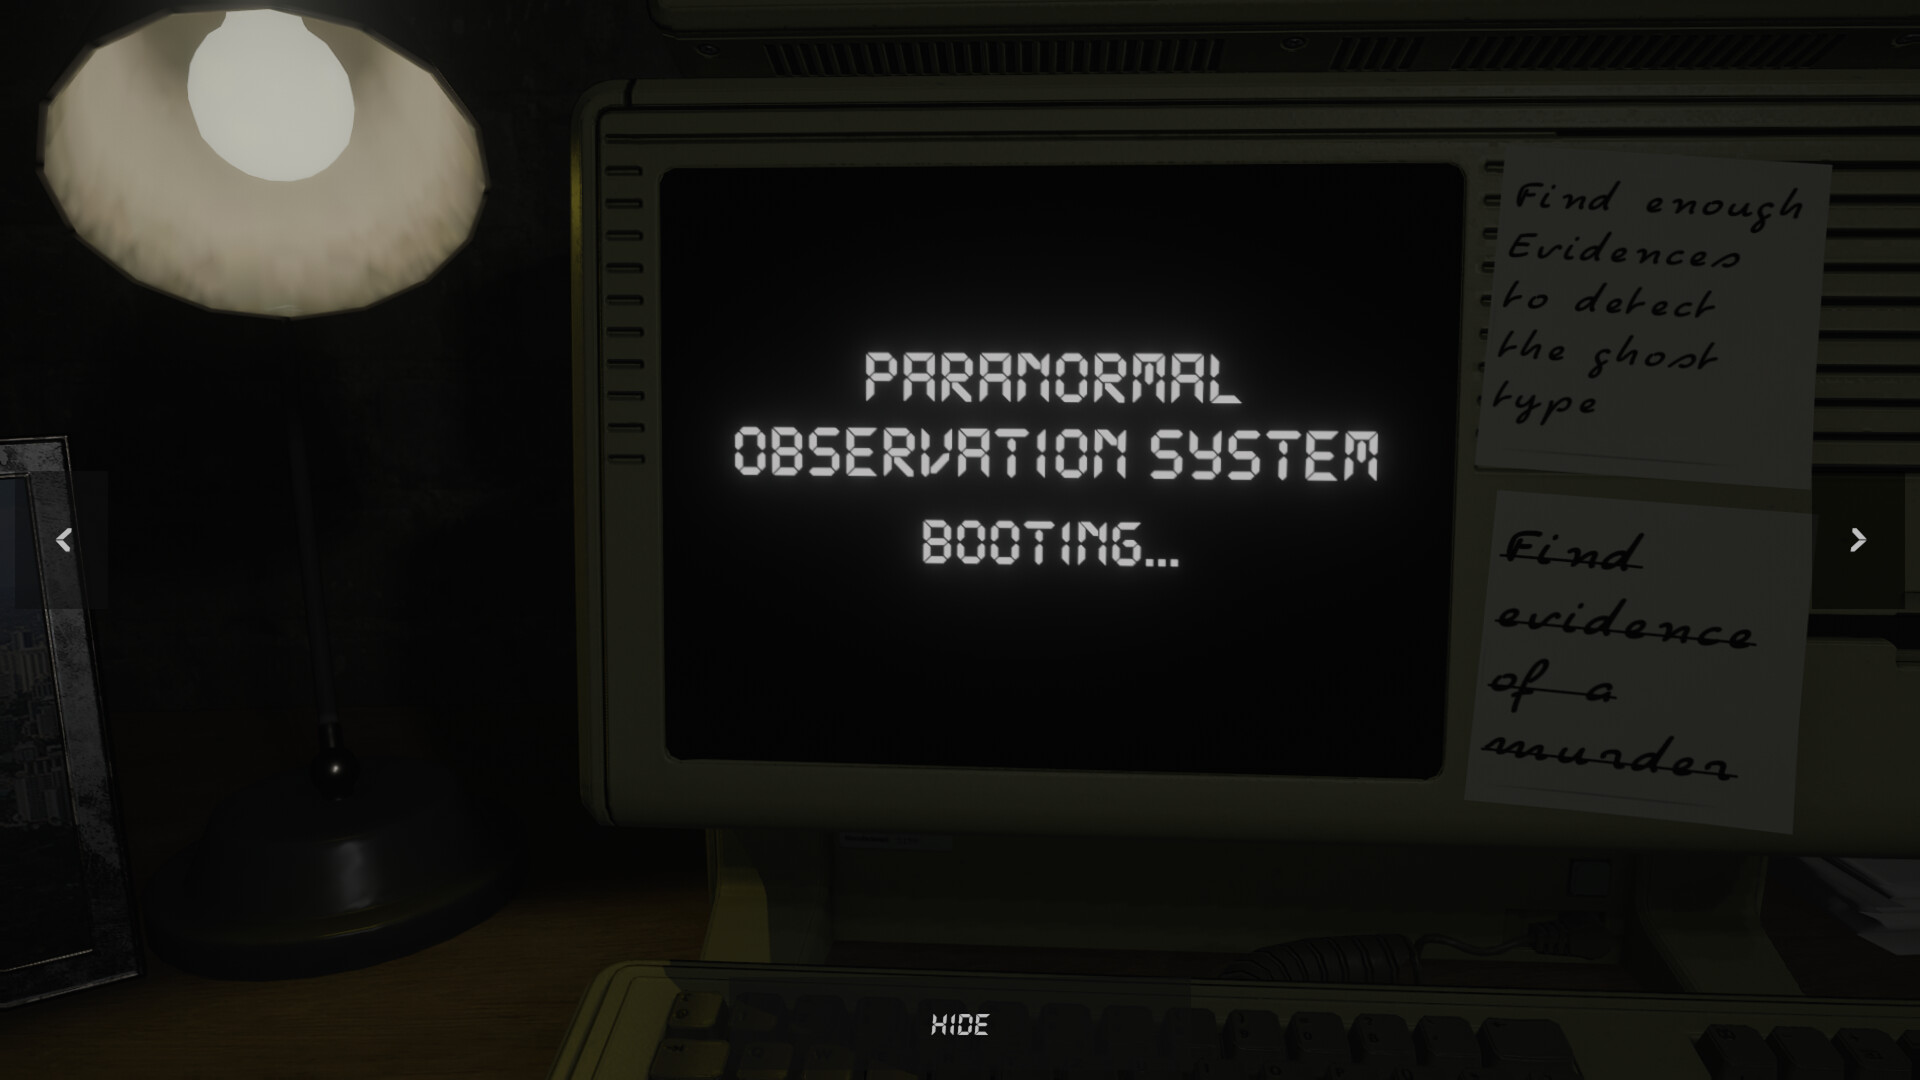 Paranormal Observation Steam CD Key